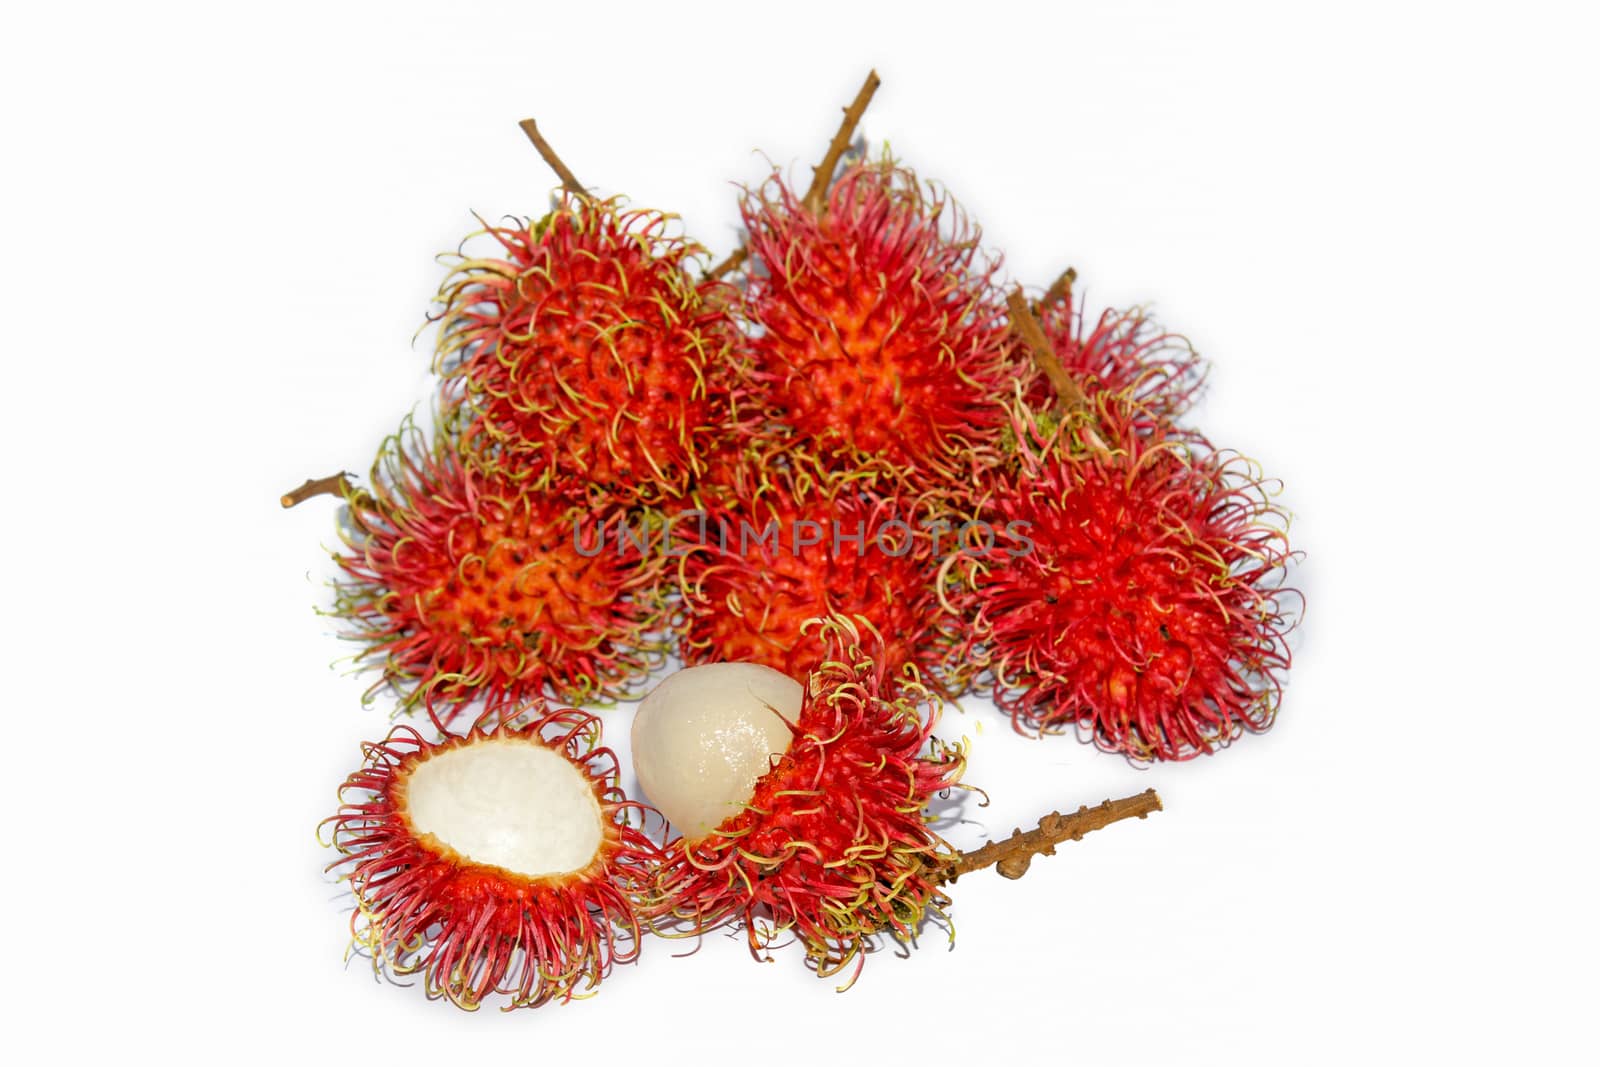 Group of fresh rambutan fruit on white background. (selective focus) by mranucha